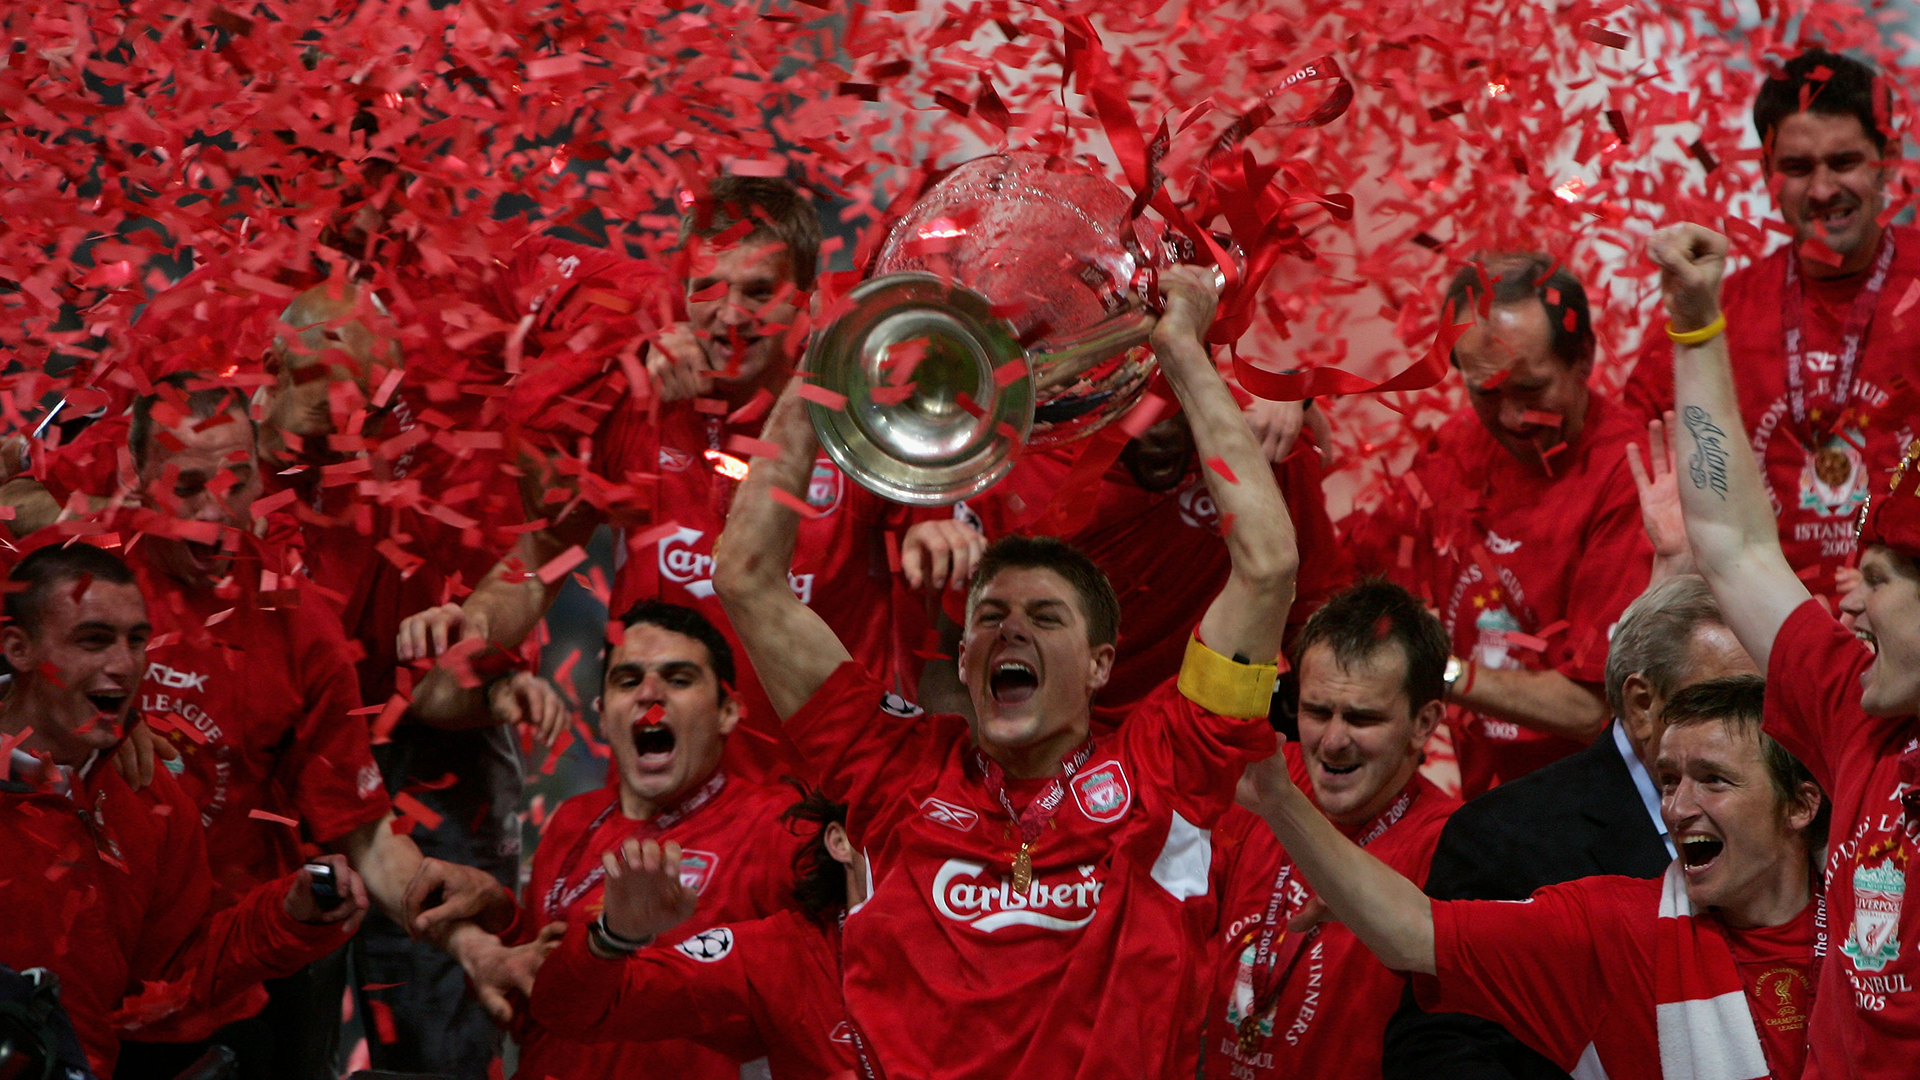 Liverpool 2005 Champions League winners